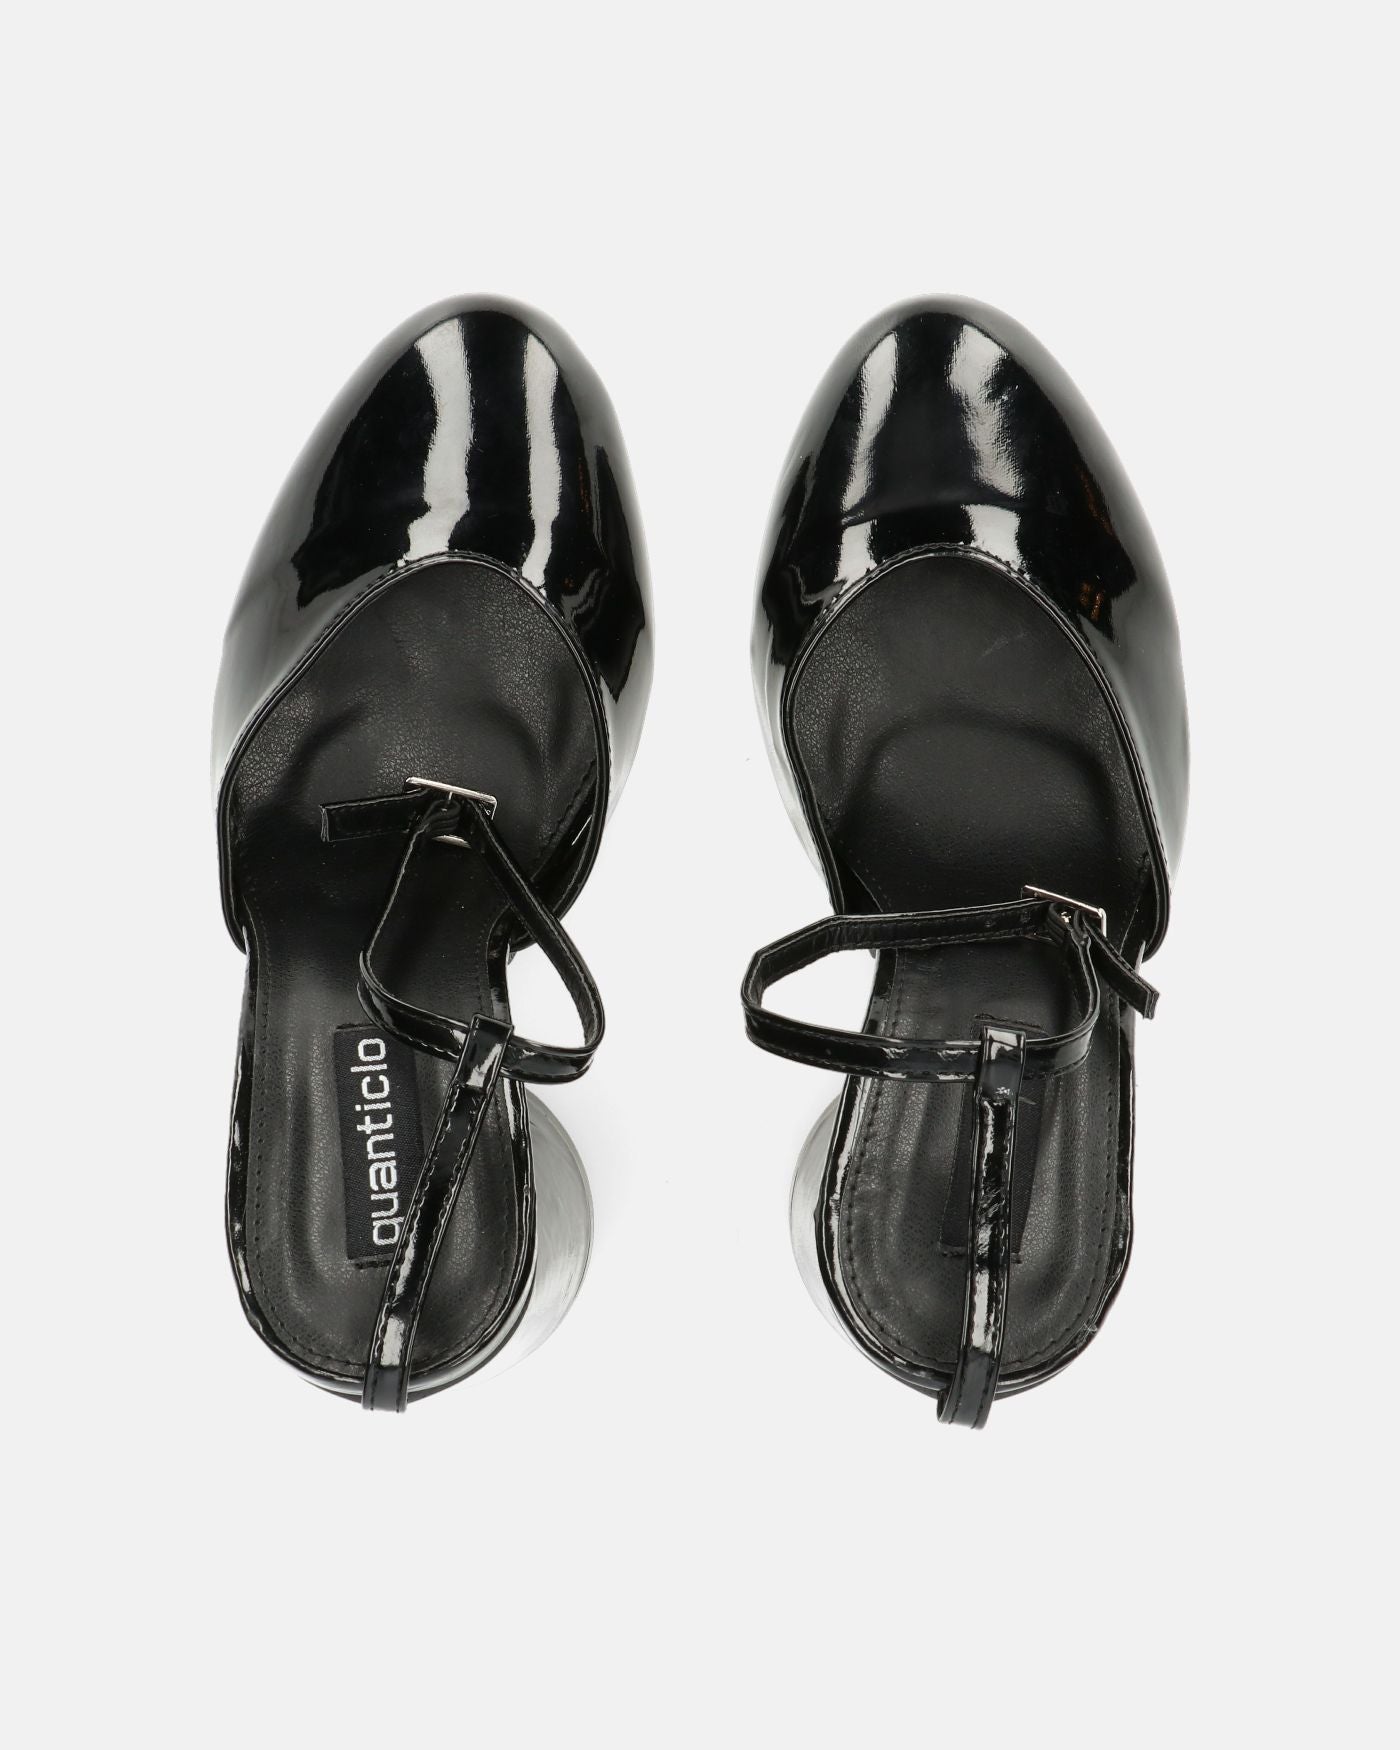 MAYBELLE - sandales glassy noir à talon cylindrique